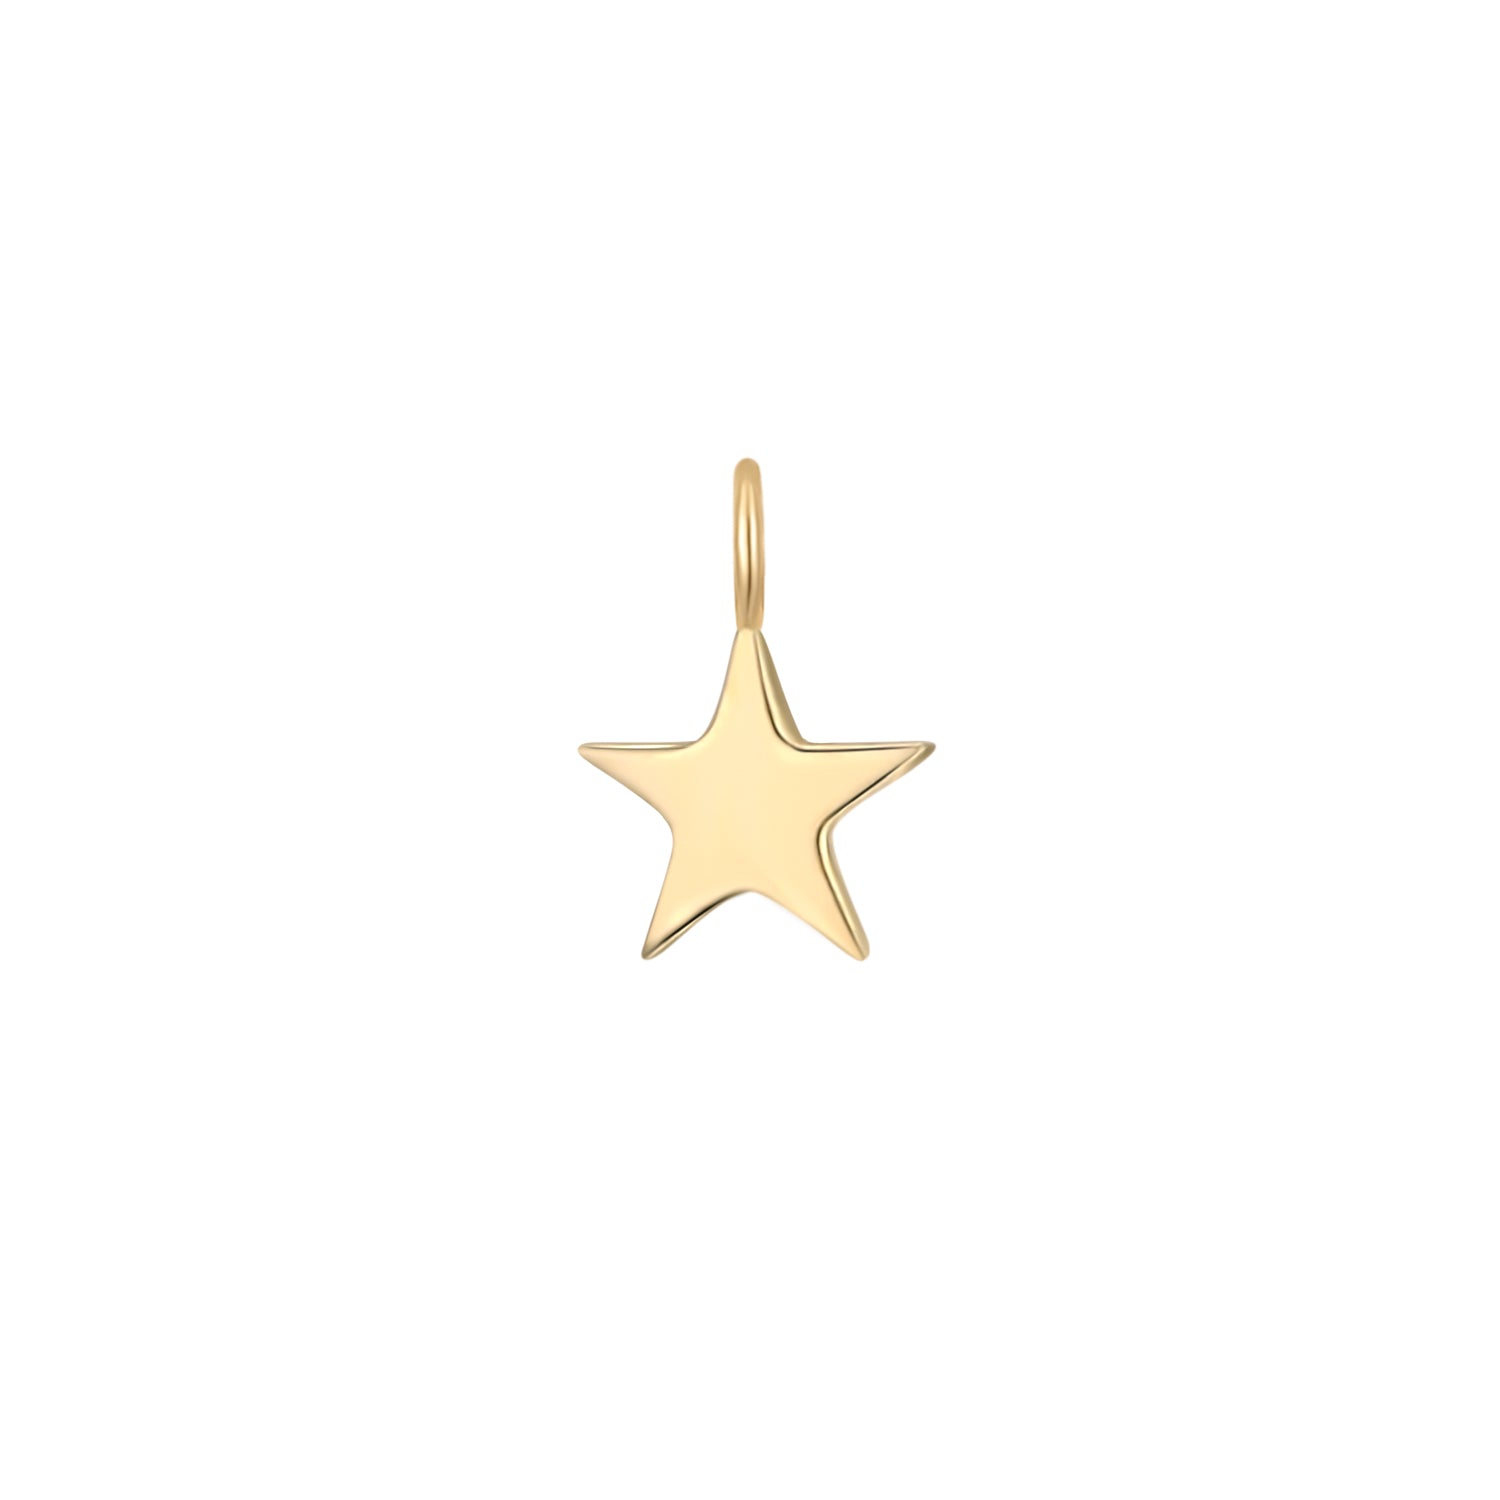 Permanent Jewelry 14K Solid Gold Star Charm / PMJ1016